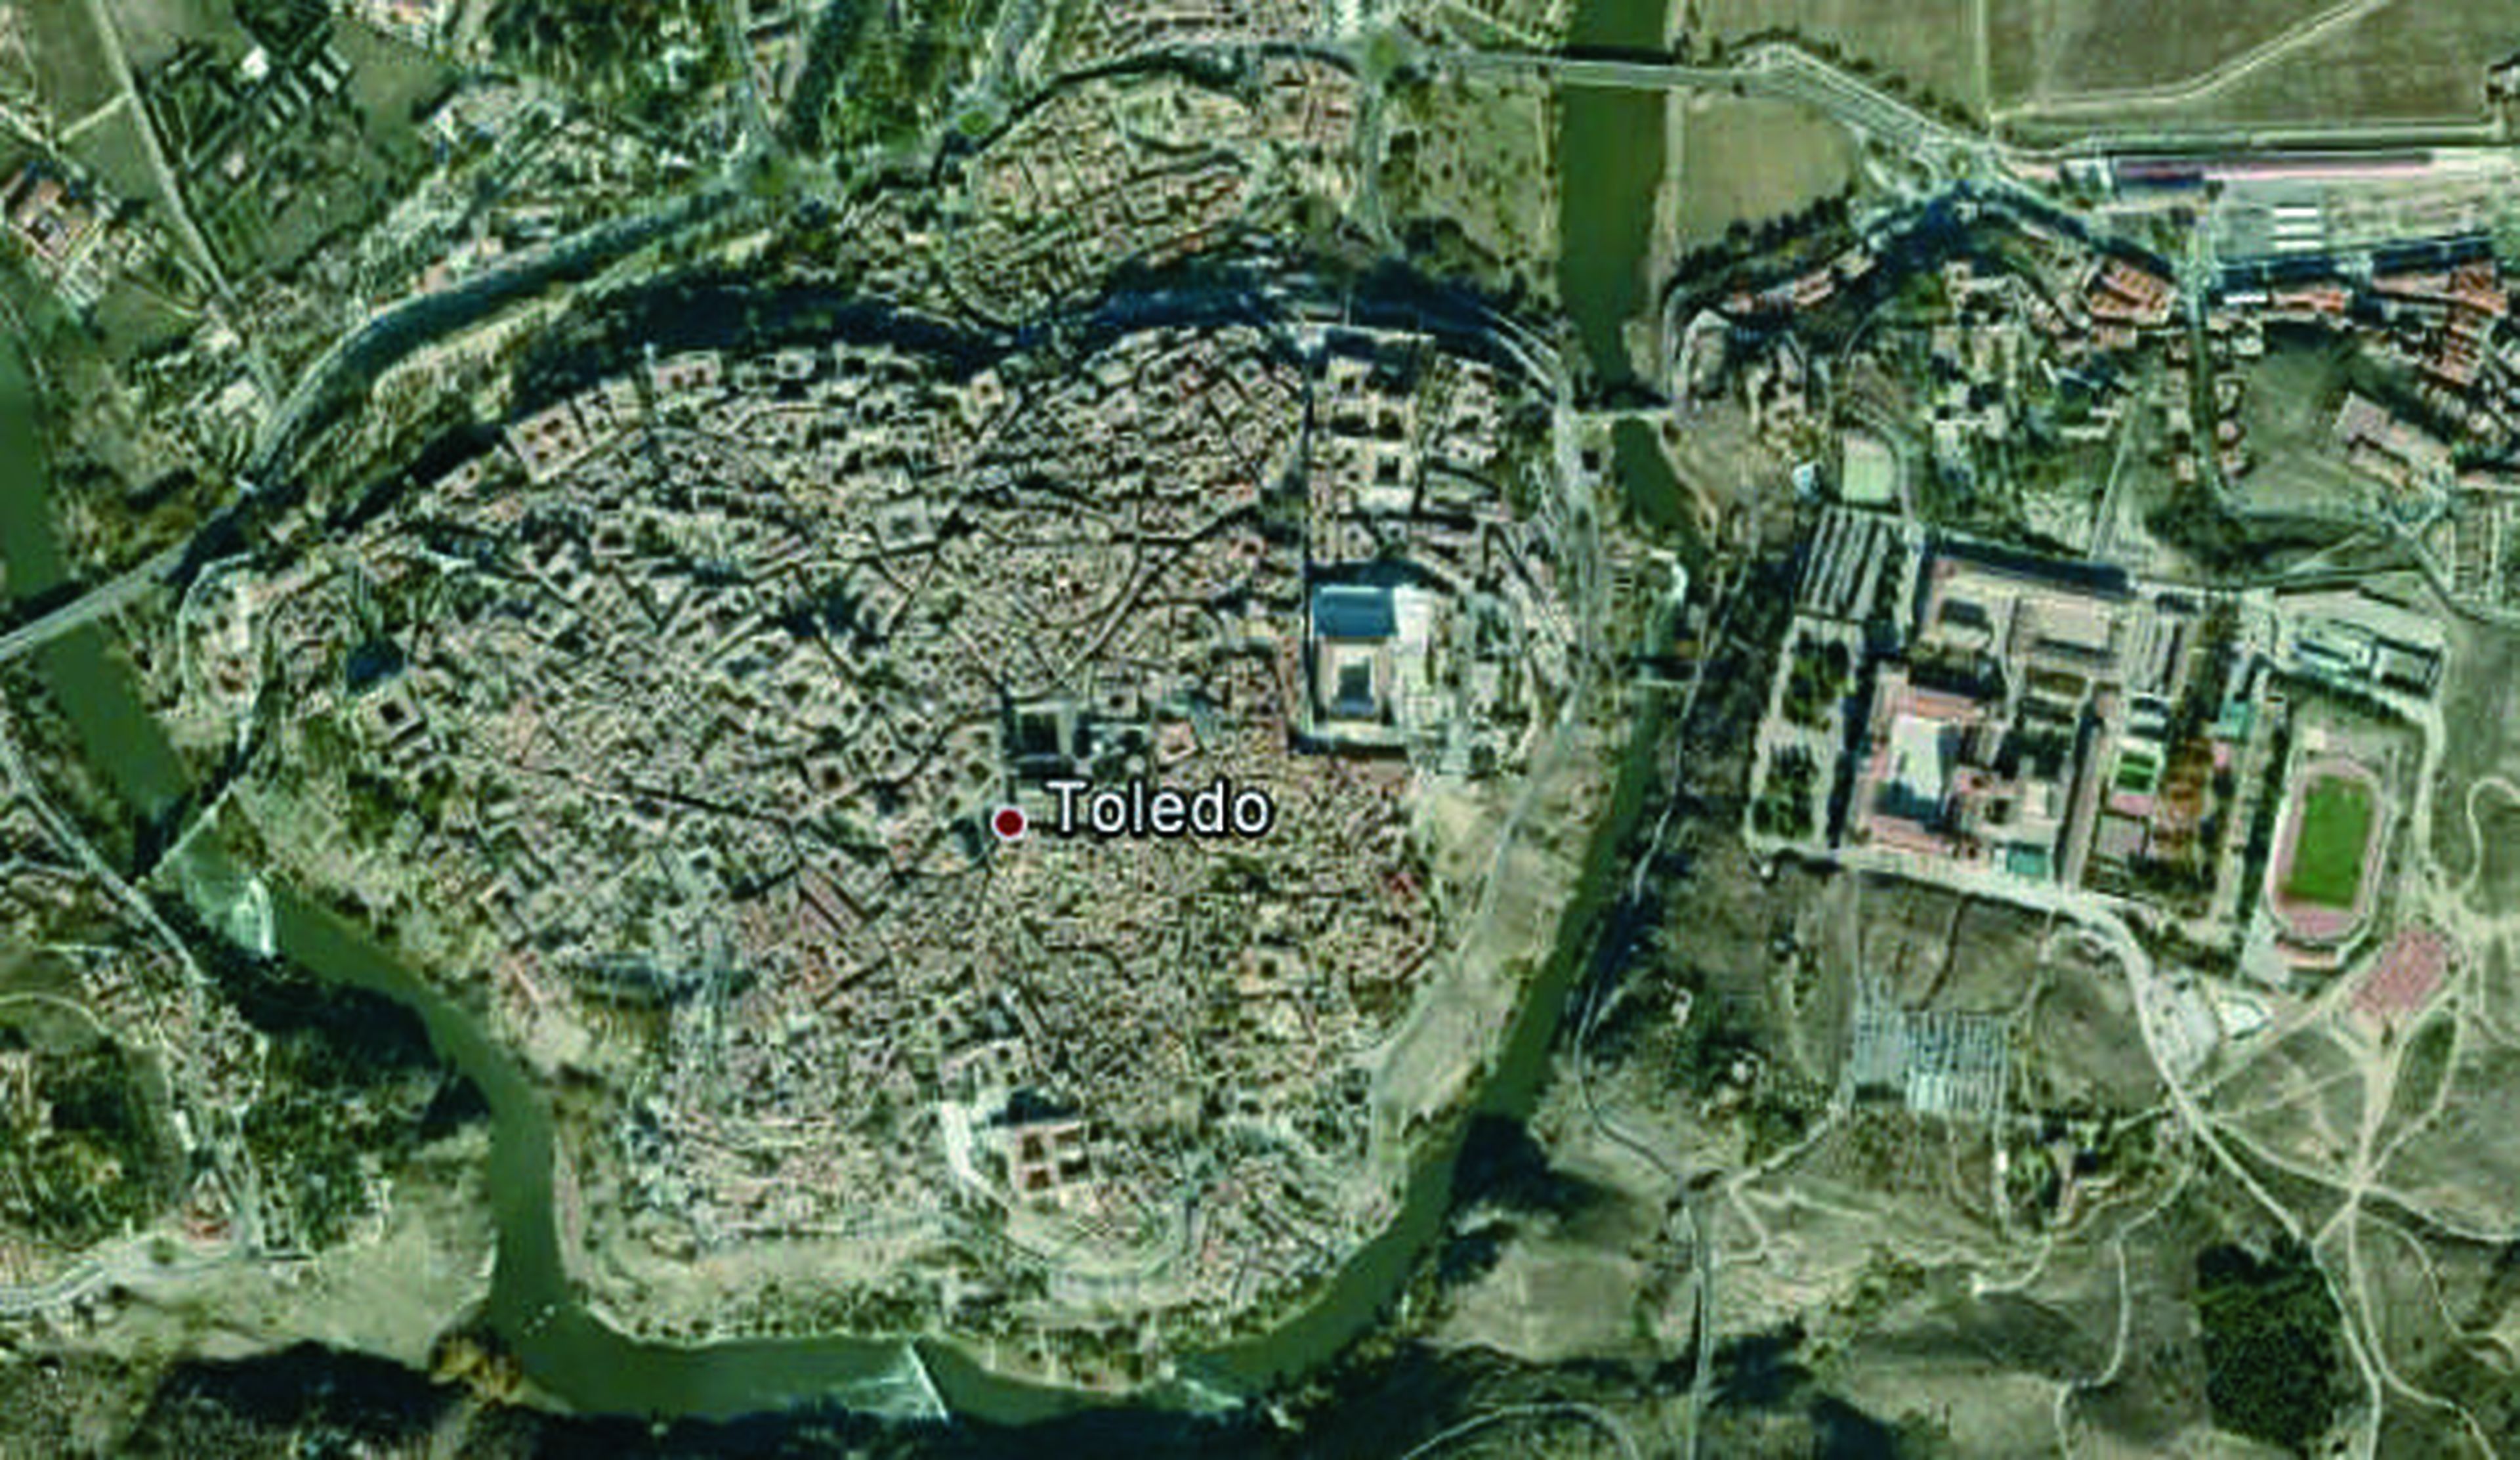 Imagen detallada en Google Earth